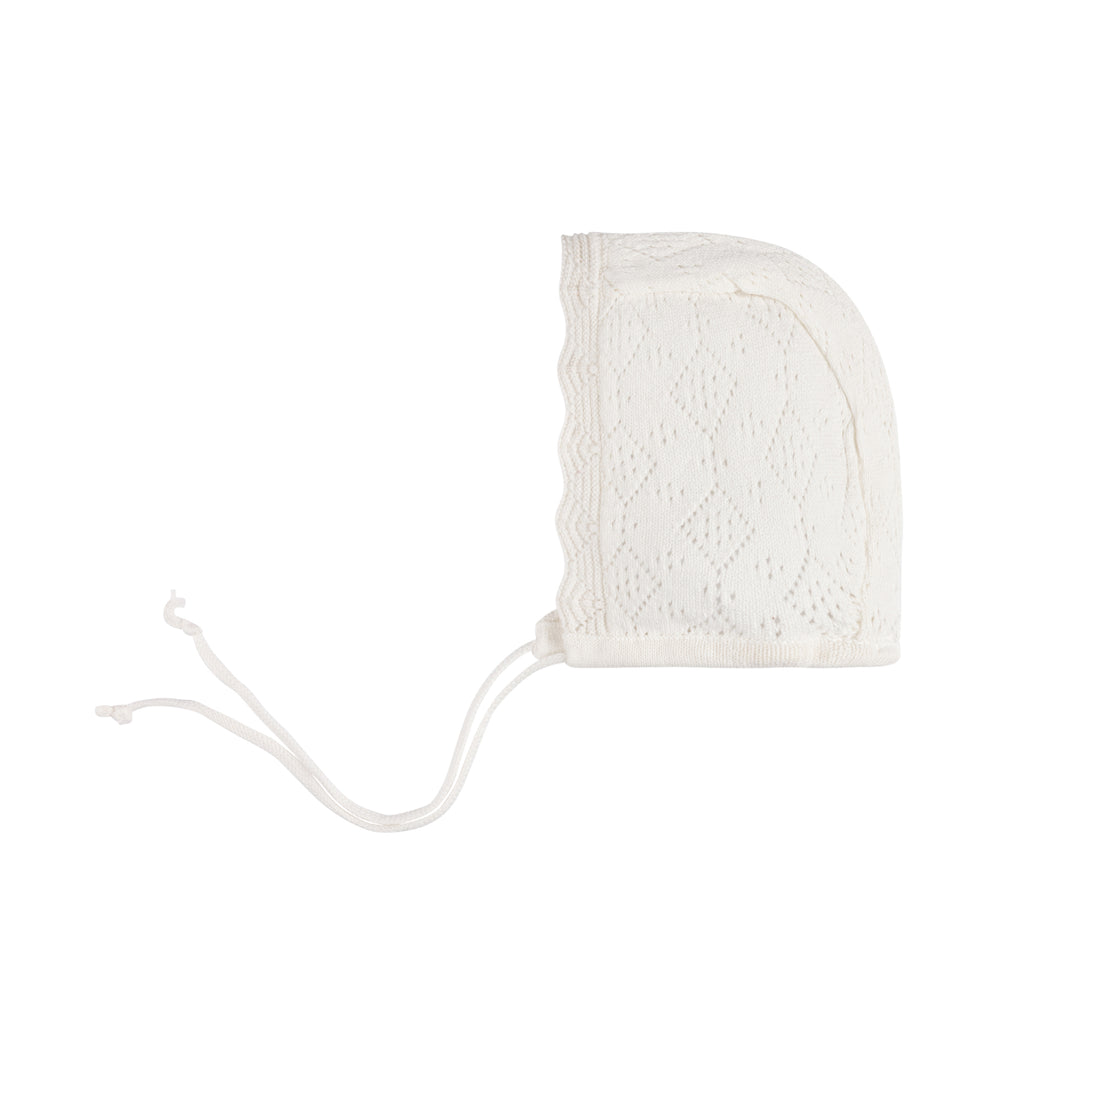 Ely`s & Co Pointelle Knit Bonnet - Ivory